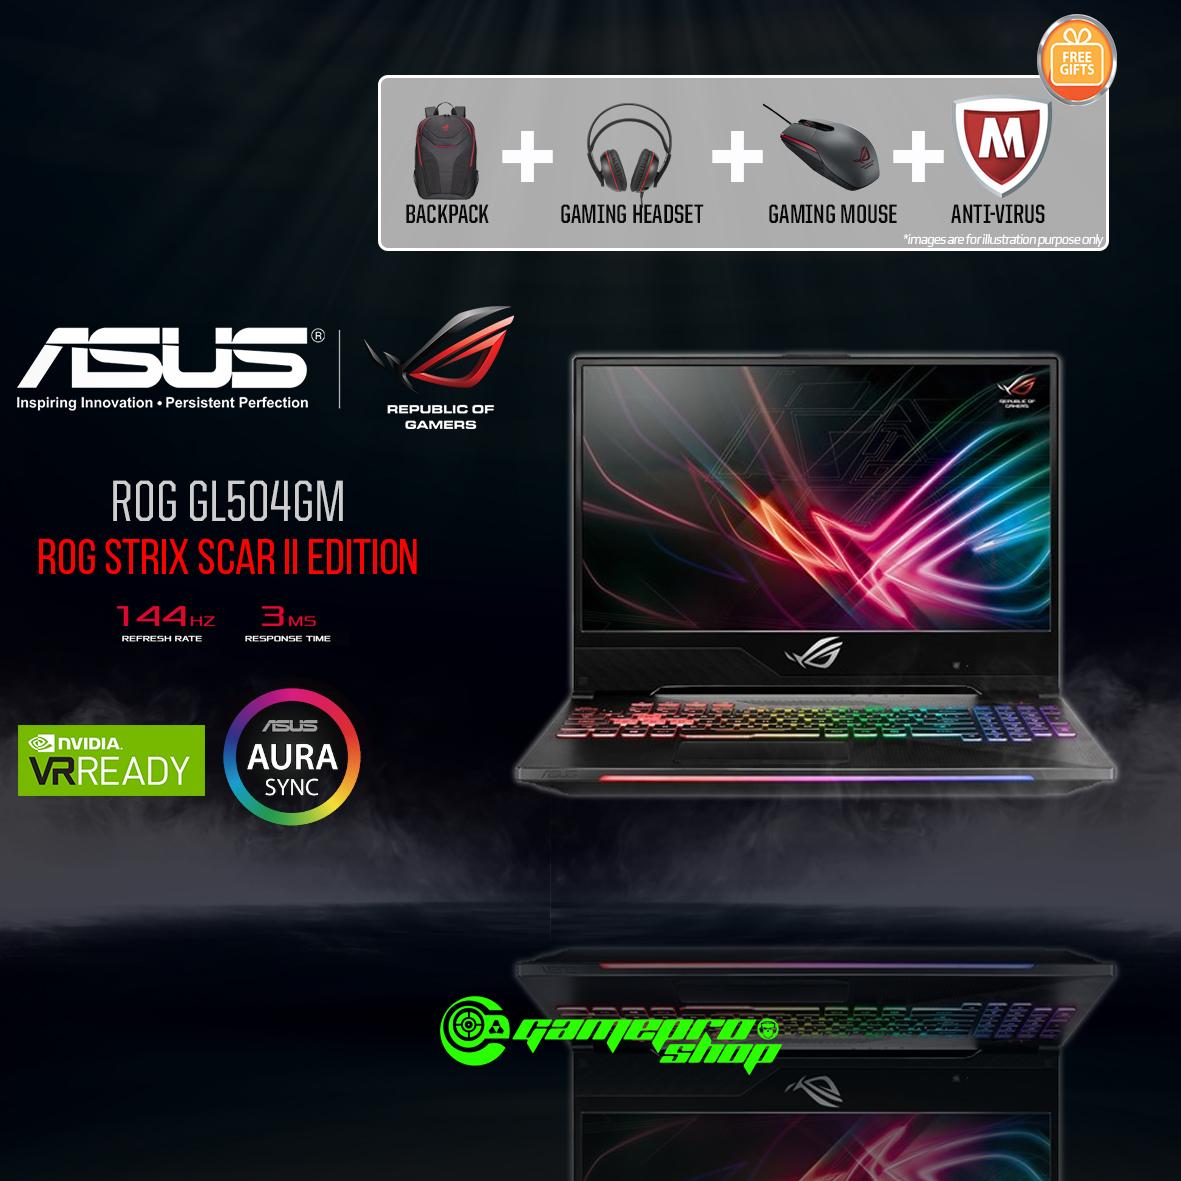 8th Gen ASUS ROG Strix SCAR II GL504GM – ES172T (8th-Gen/256GB SSD/GTX 1060 6GB GDDR5) 15.6″ With 144Hz Gaming Laptop *END OF MONTH PROMO*